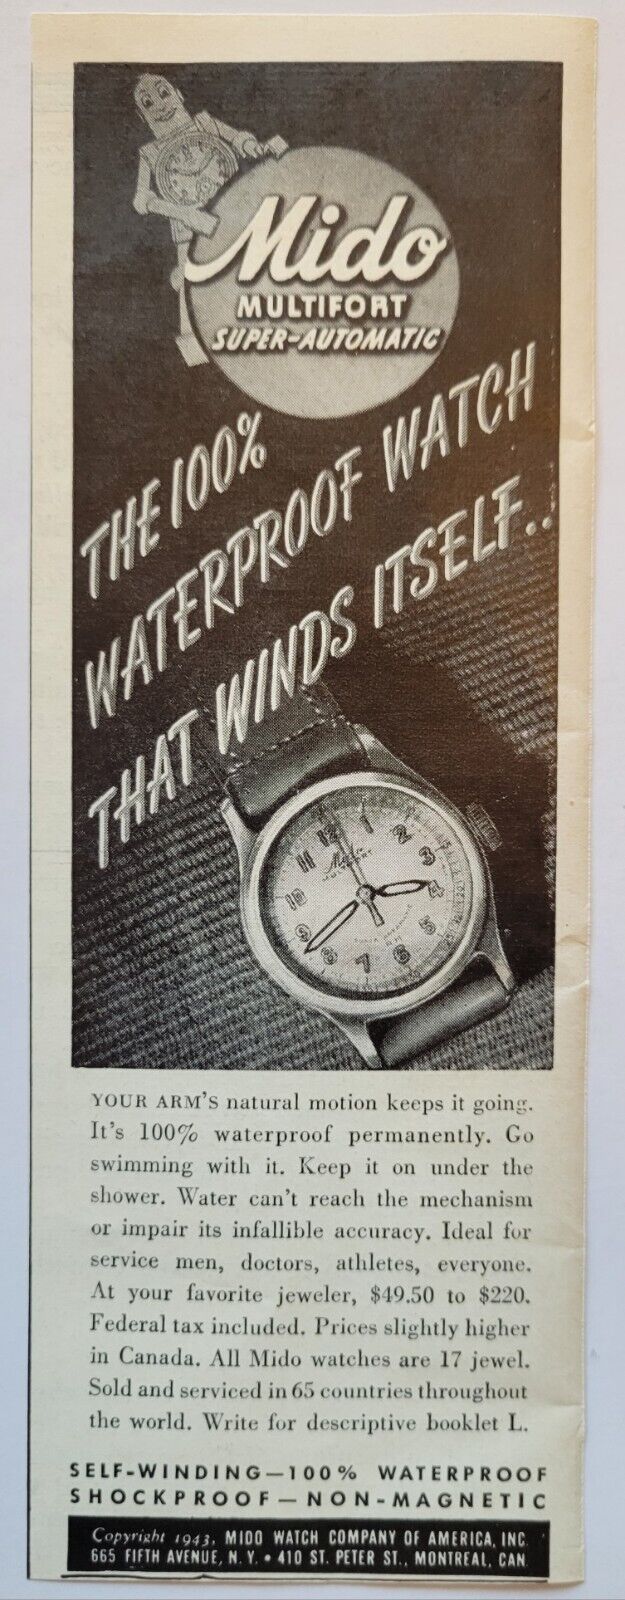 1943 Mido Self-Winding Watch Waterproof Shockproof Non-Magnetic Ad 2.6\